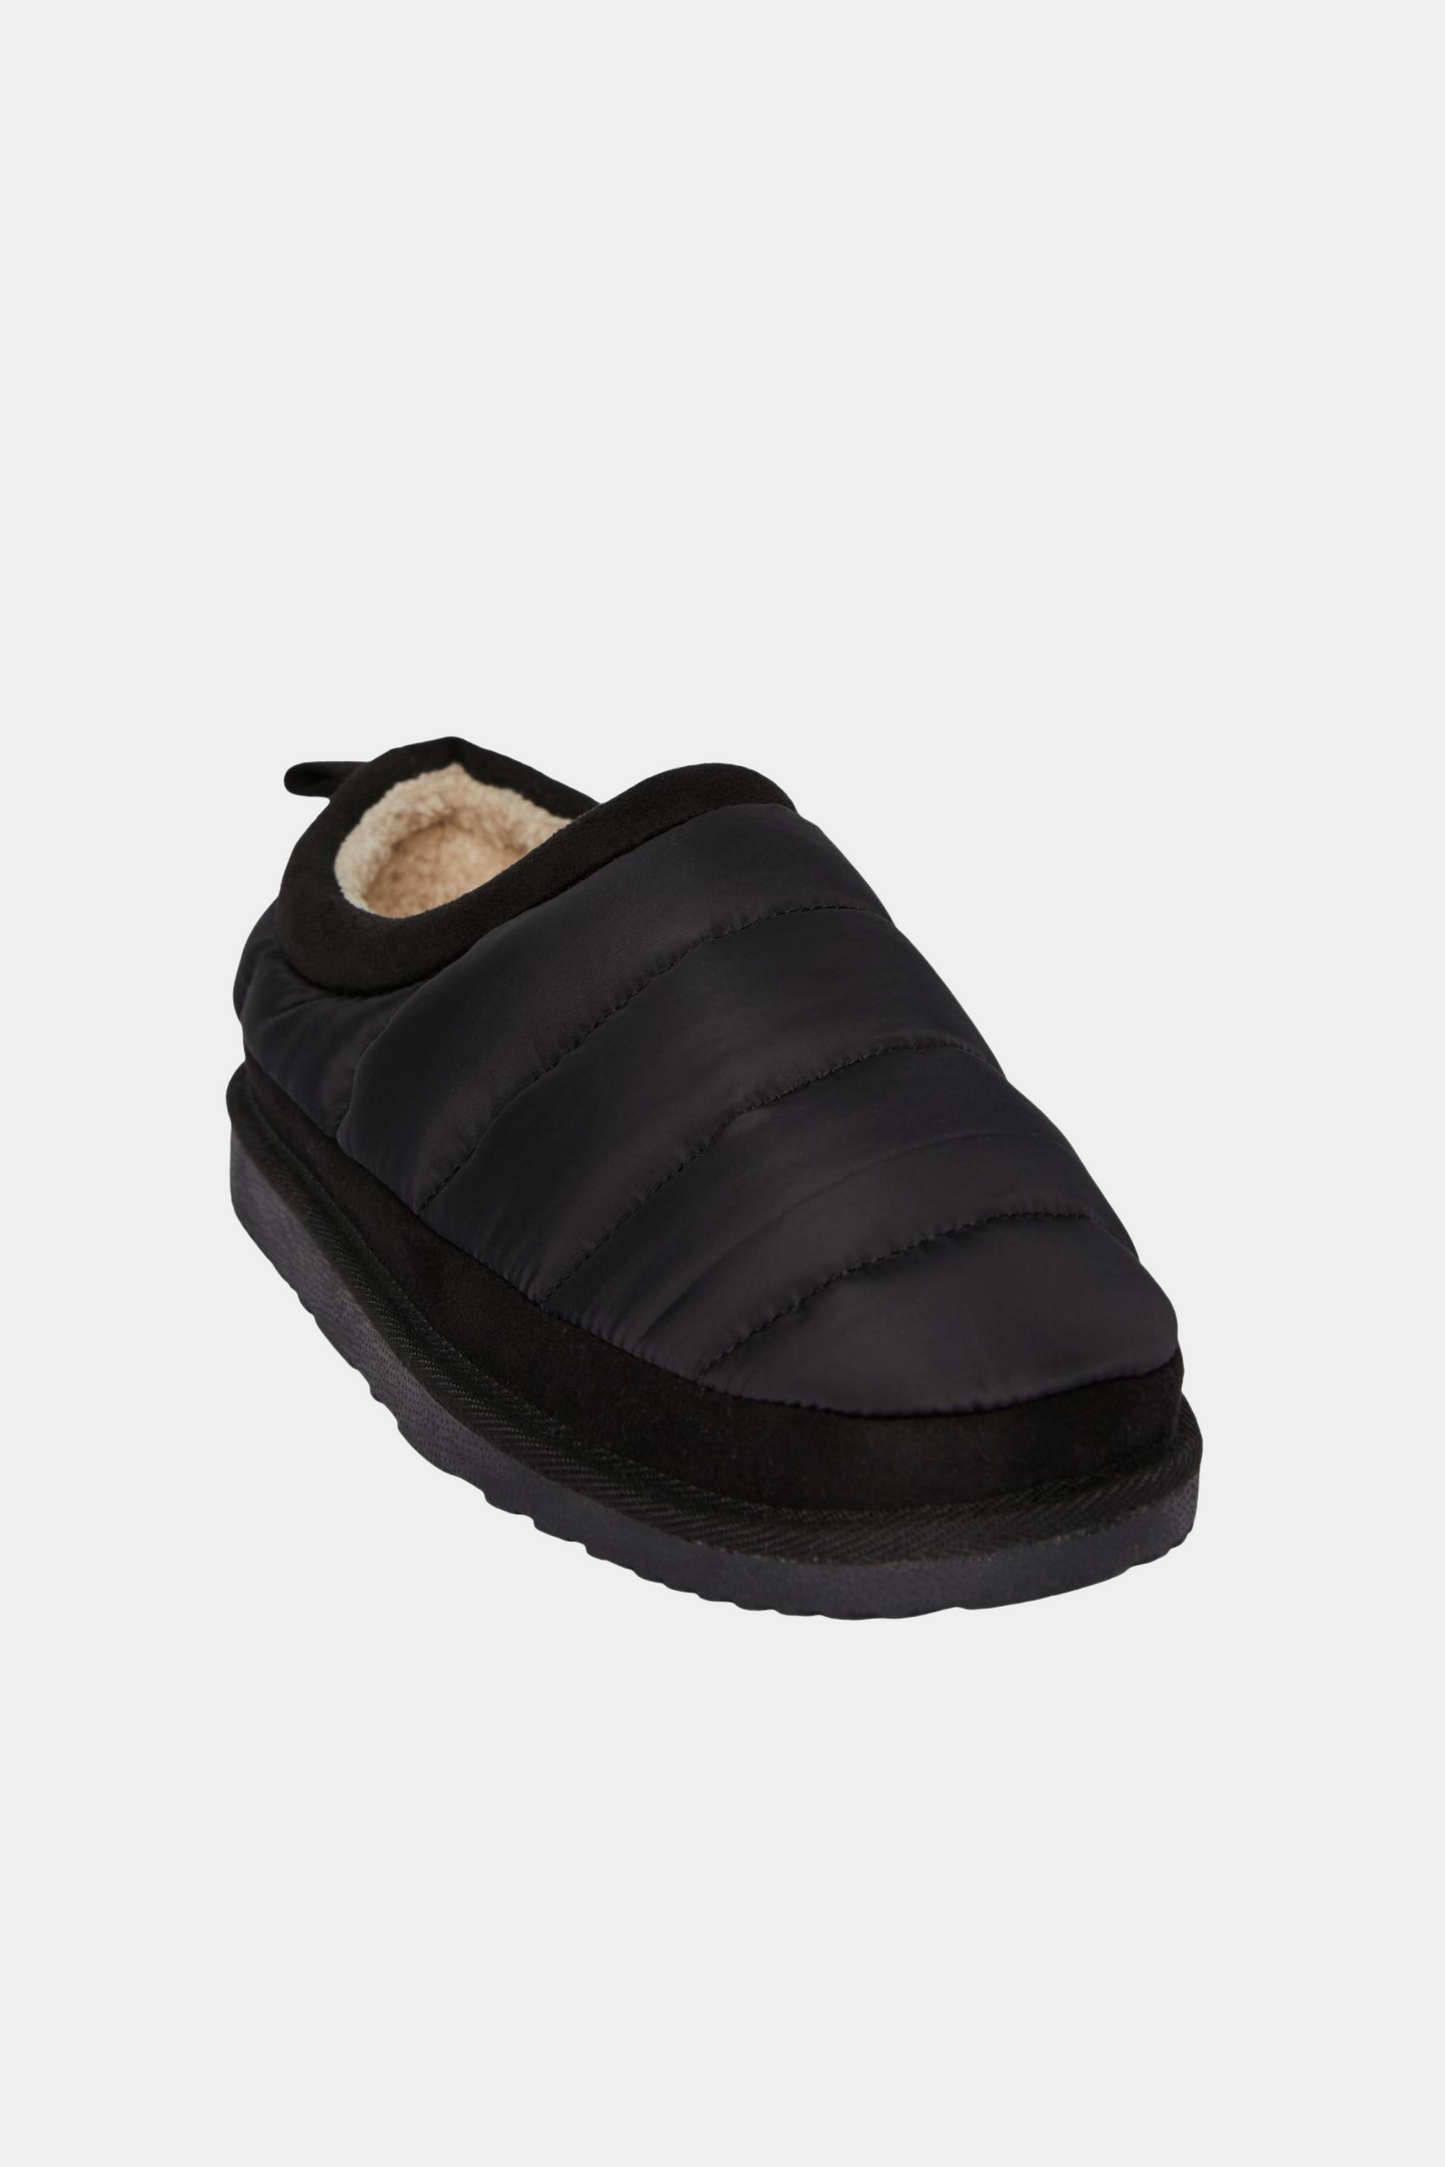 PCKara padded slipper, black